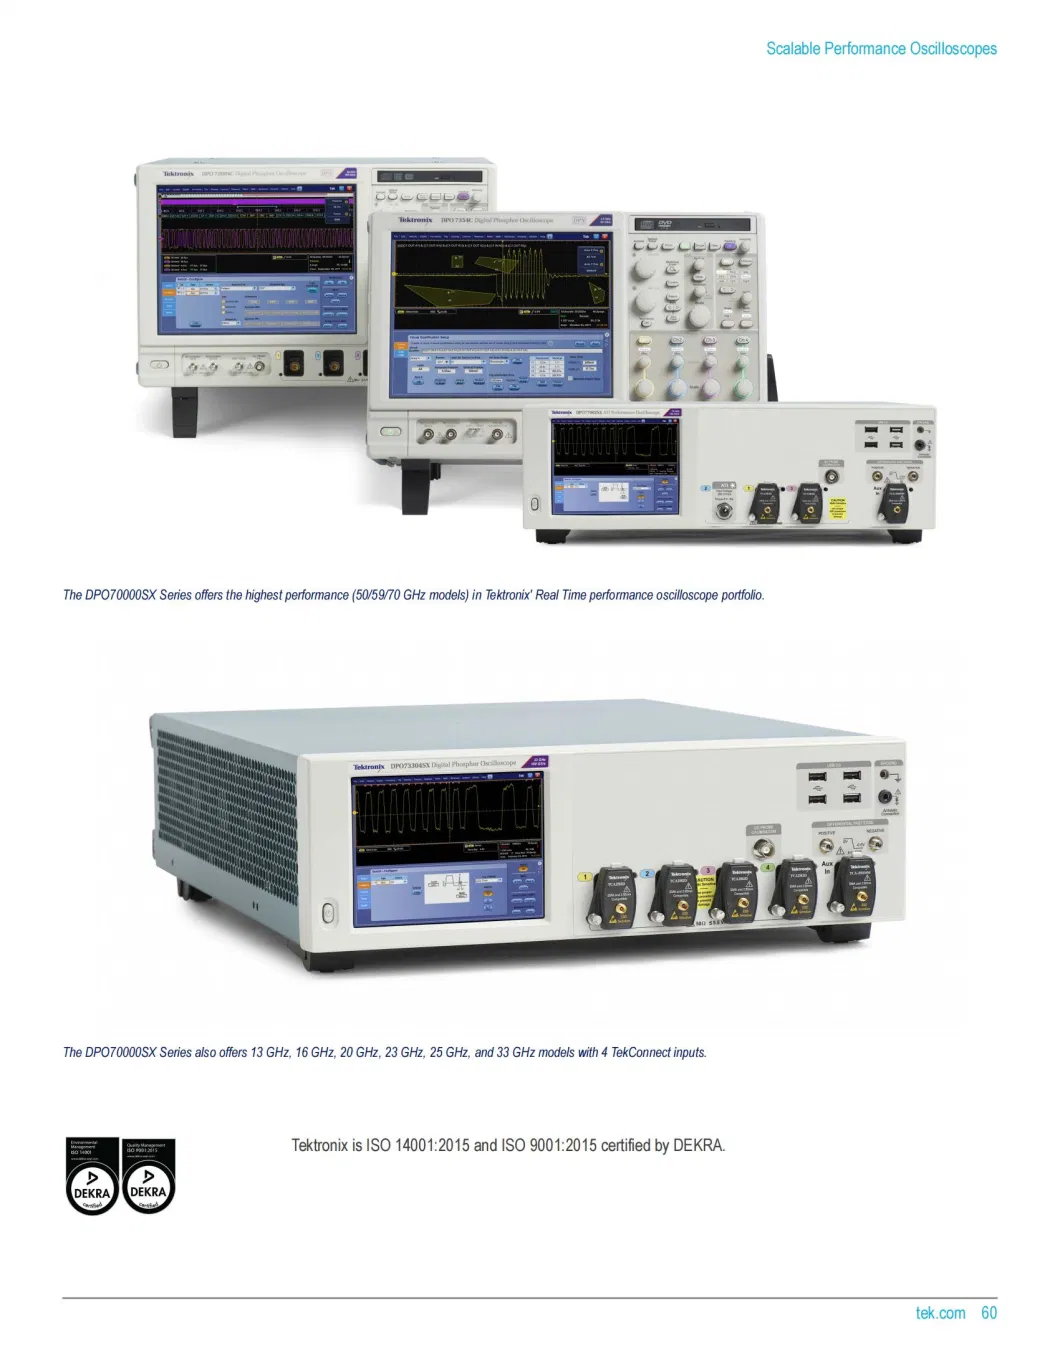 Dps77004sx Dual Unit System70 GHz 200 GS/s Dpo70000sx Ati Performance Oscilloscope